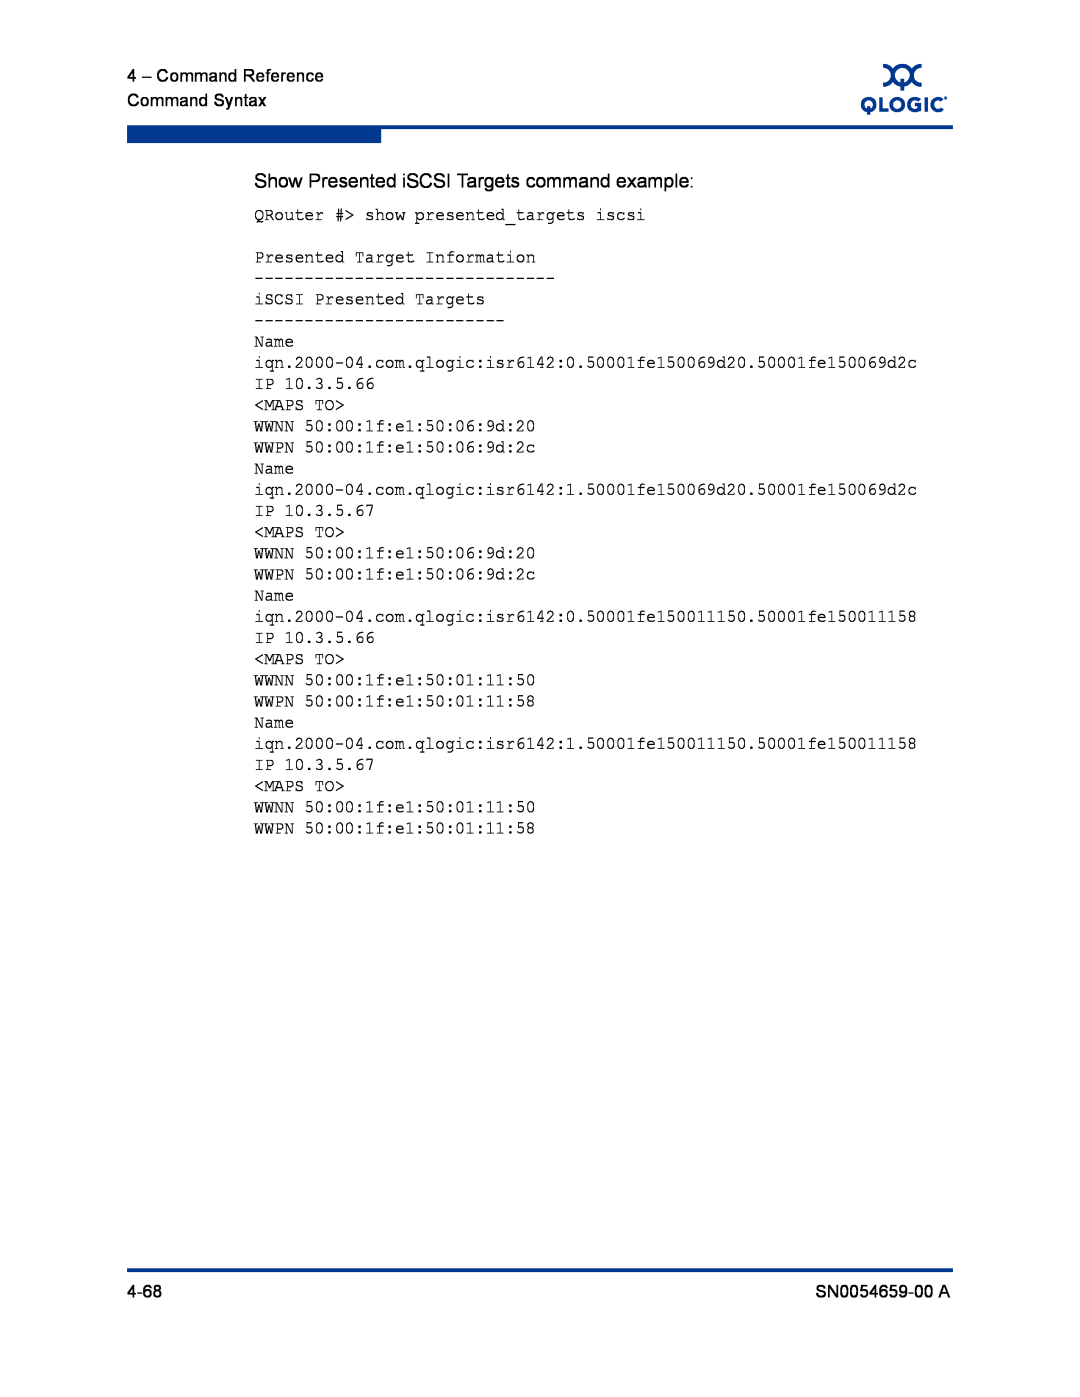 Q-Logic ISR6142 manual Show Presented iSCSI Targets command example 